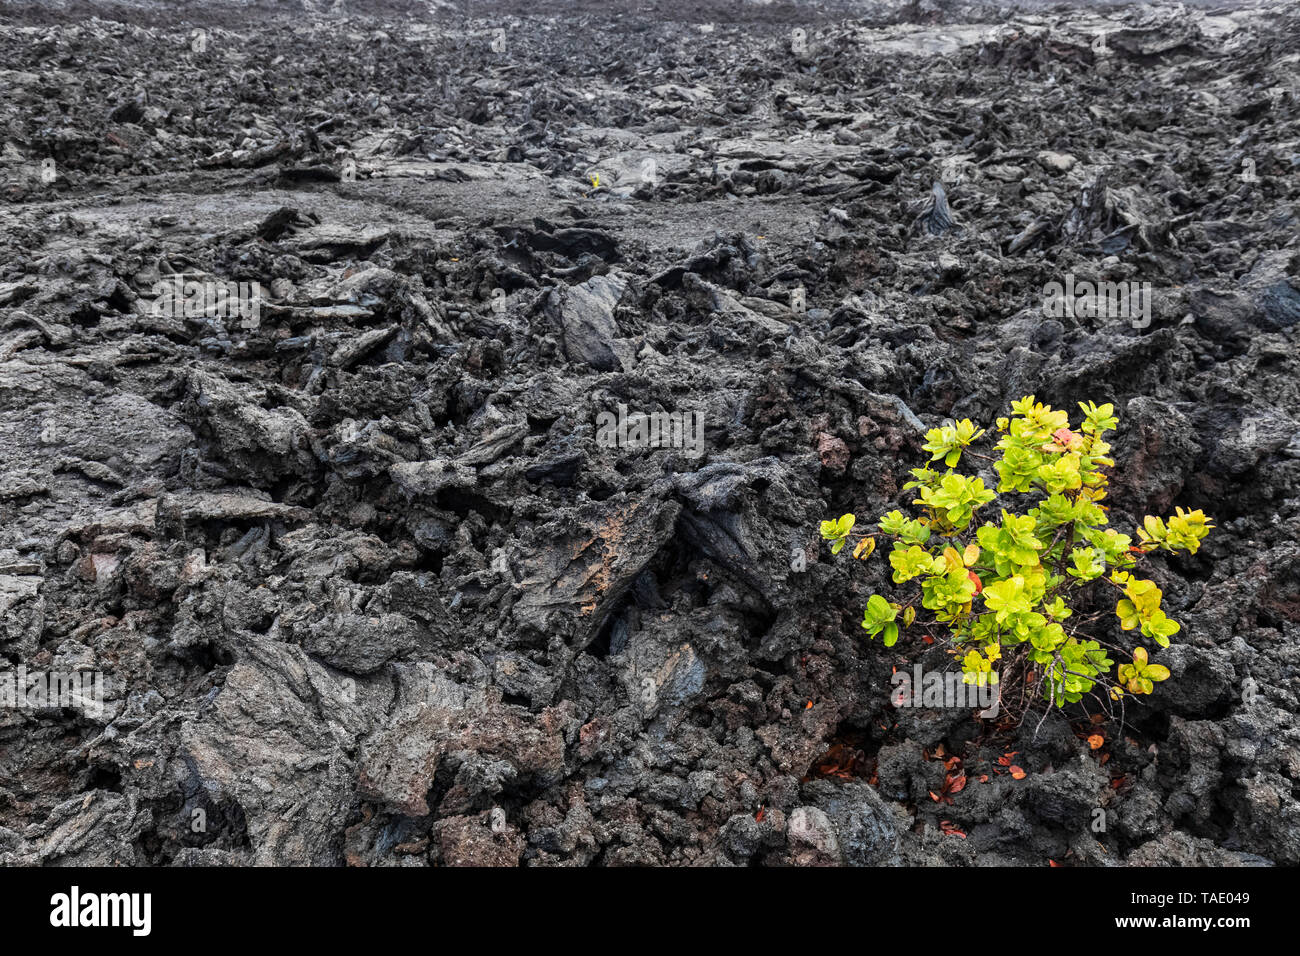 USA, Hawaii, Volcanoes National Park, plant growing on igneous rocks Stock Photo